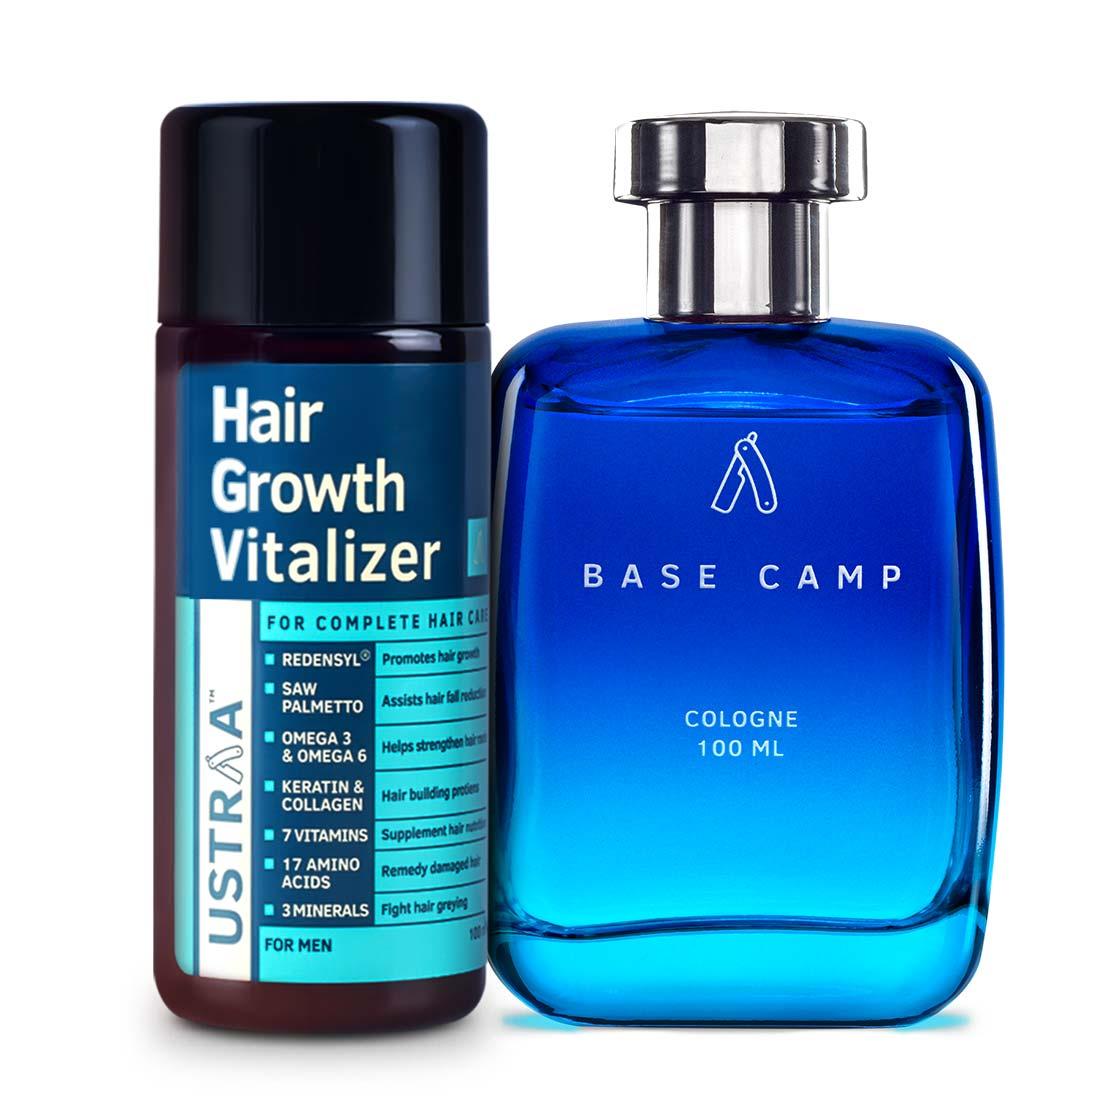 Cologne Base Camp & Hair Growth Vitalizer